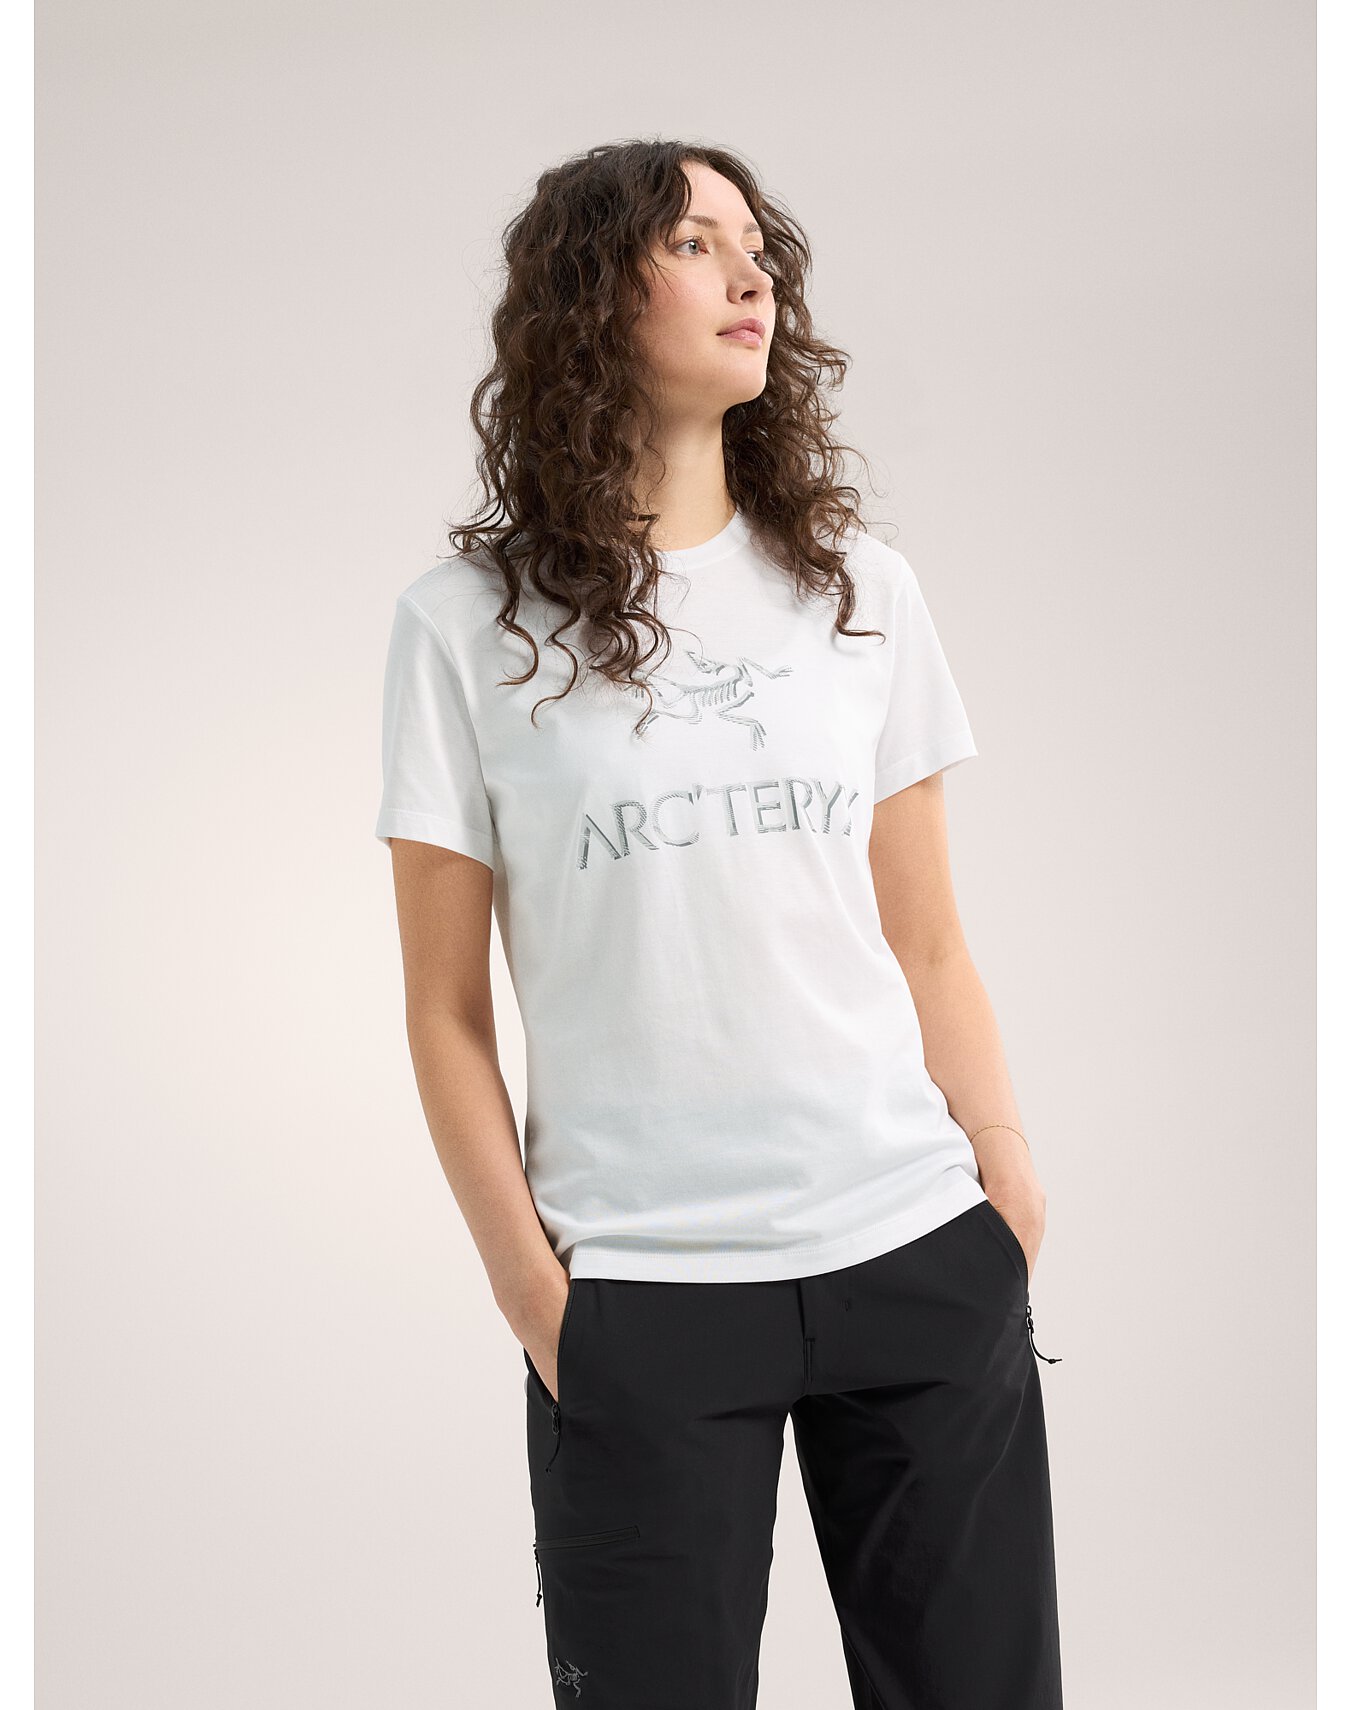 Arc'Word Cotton T-Shirt Women's | Arc'teryx